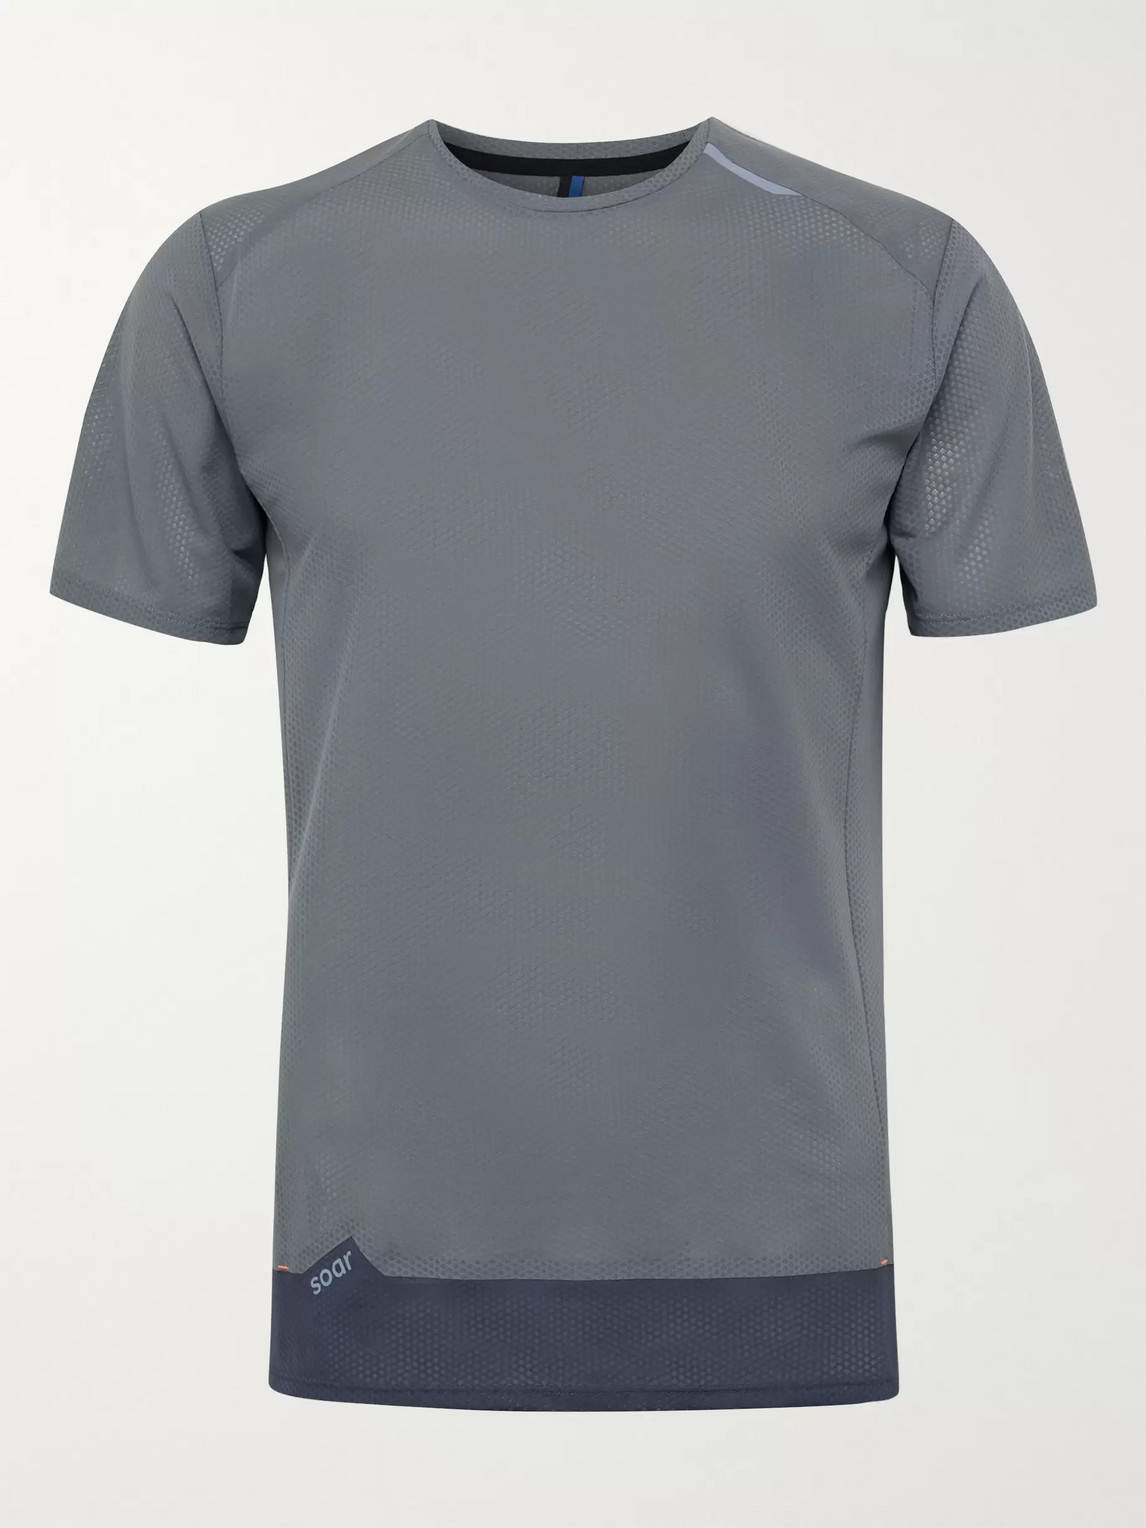 Soar Tech-t Mesh T-shirt In Grey